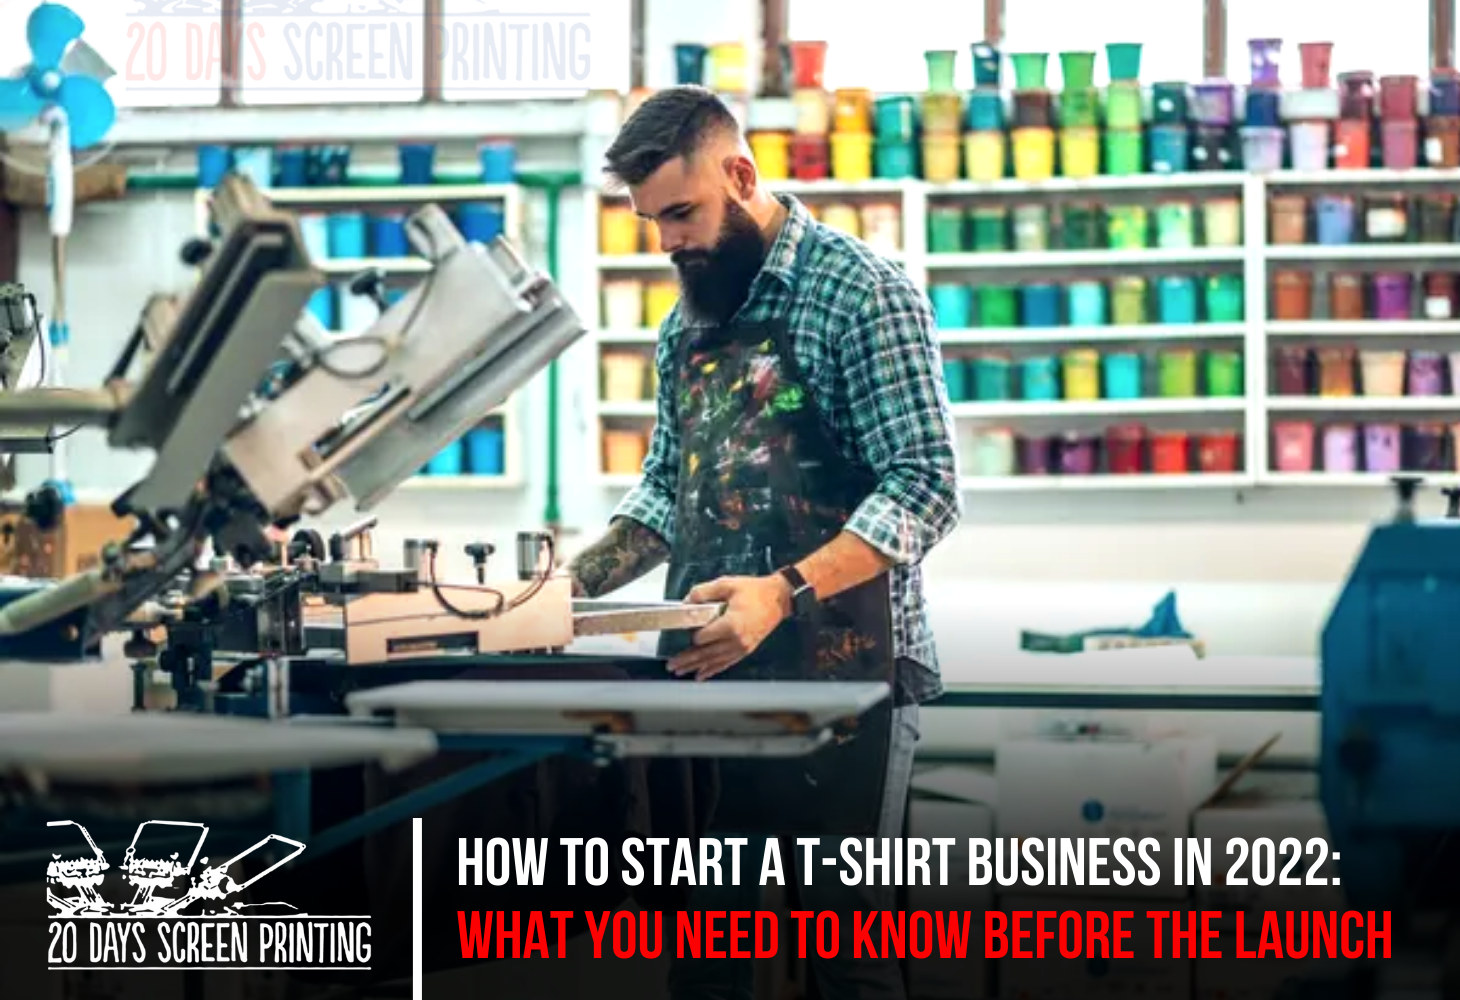 Man printing custom made t-shirt using screen printing method - starting t-shirt business.